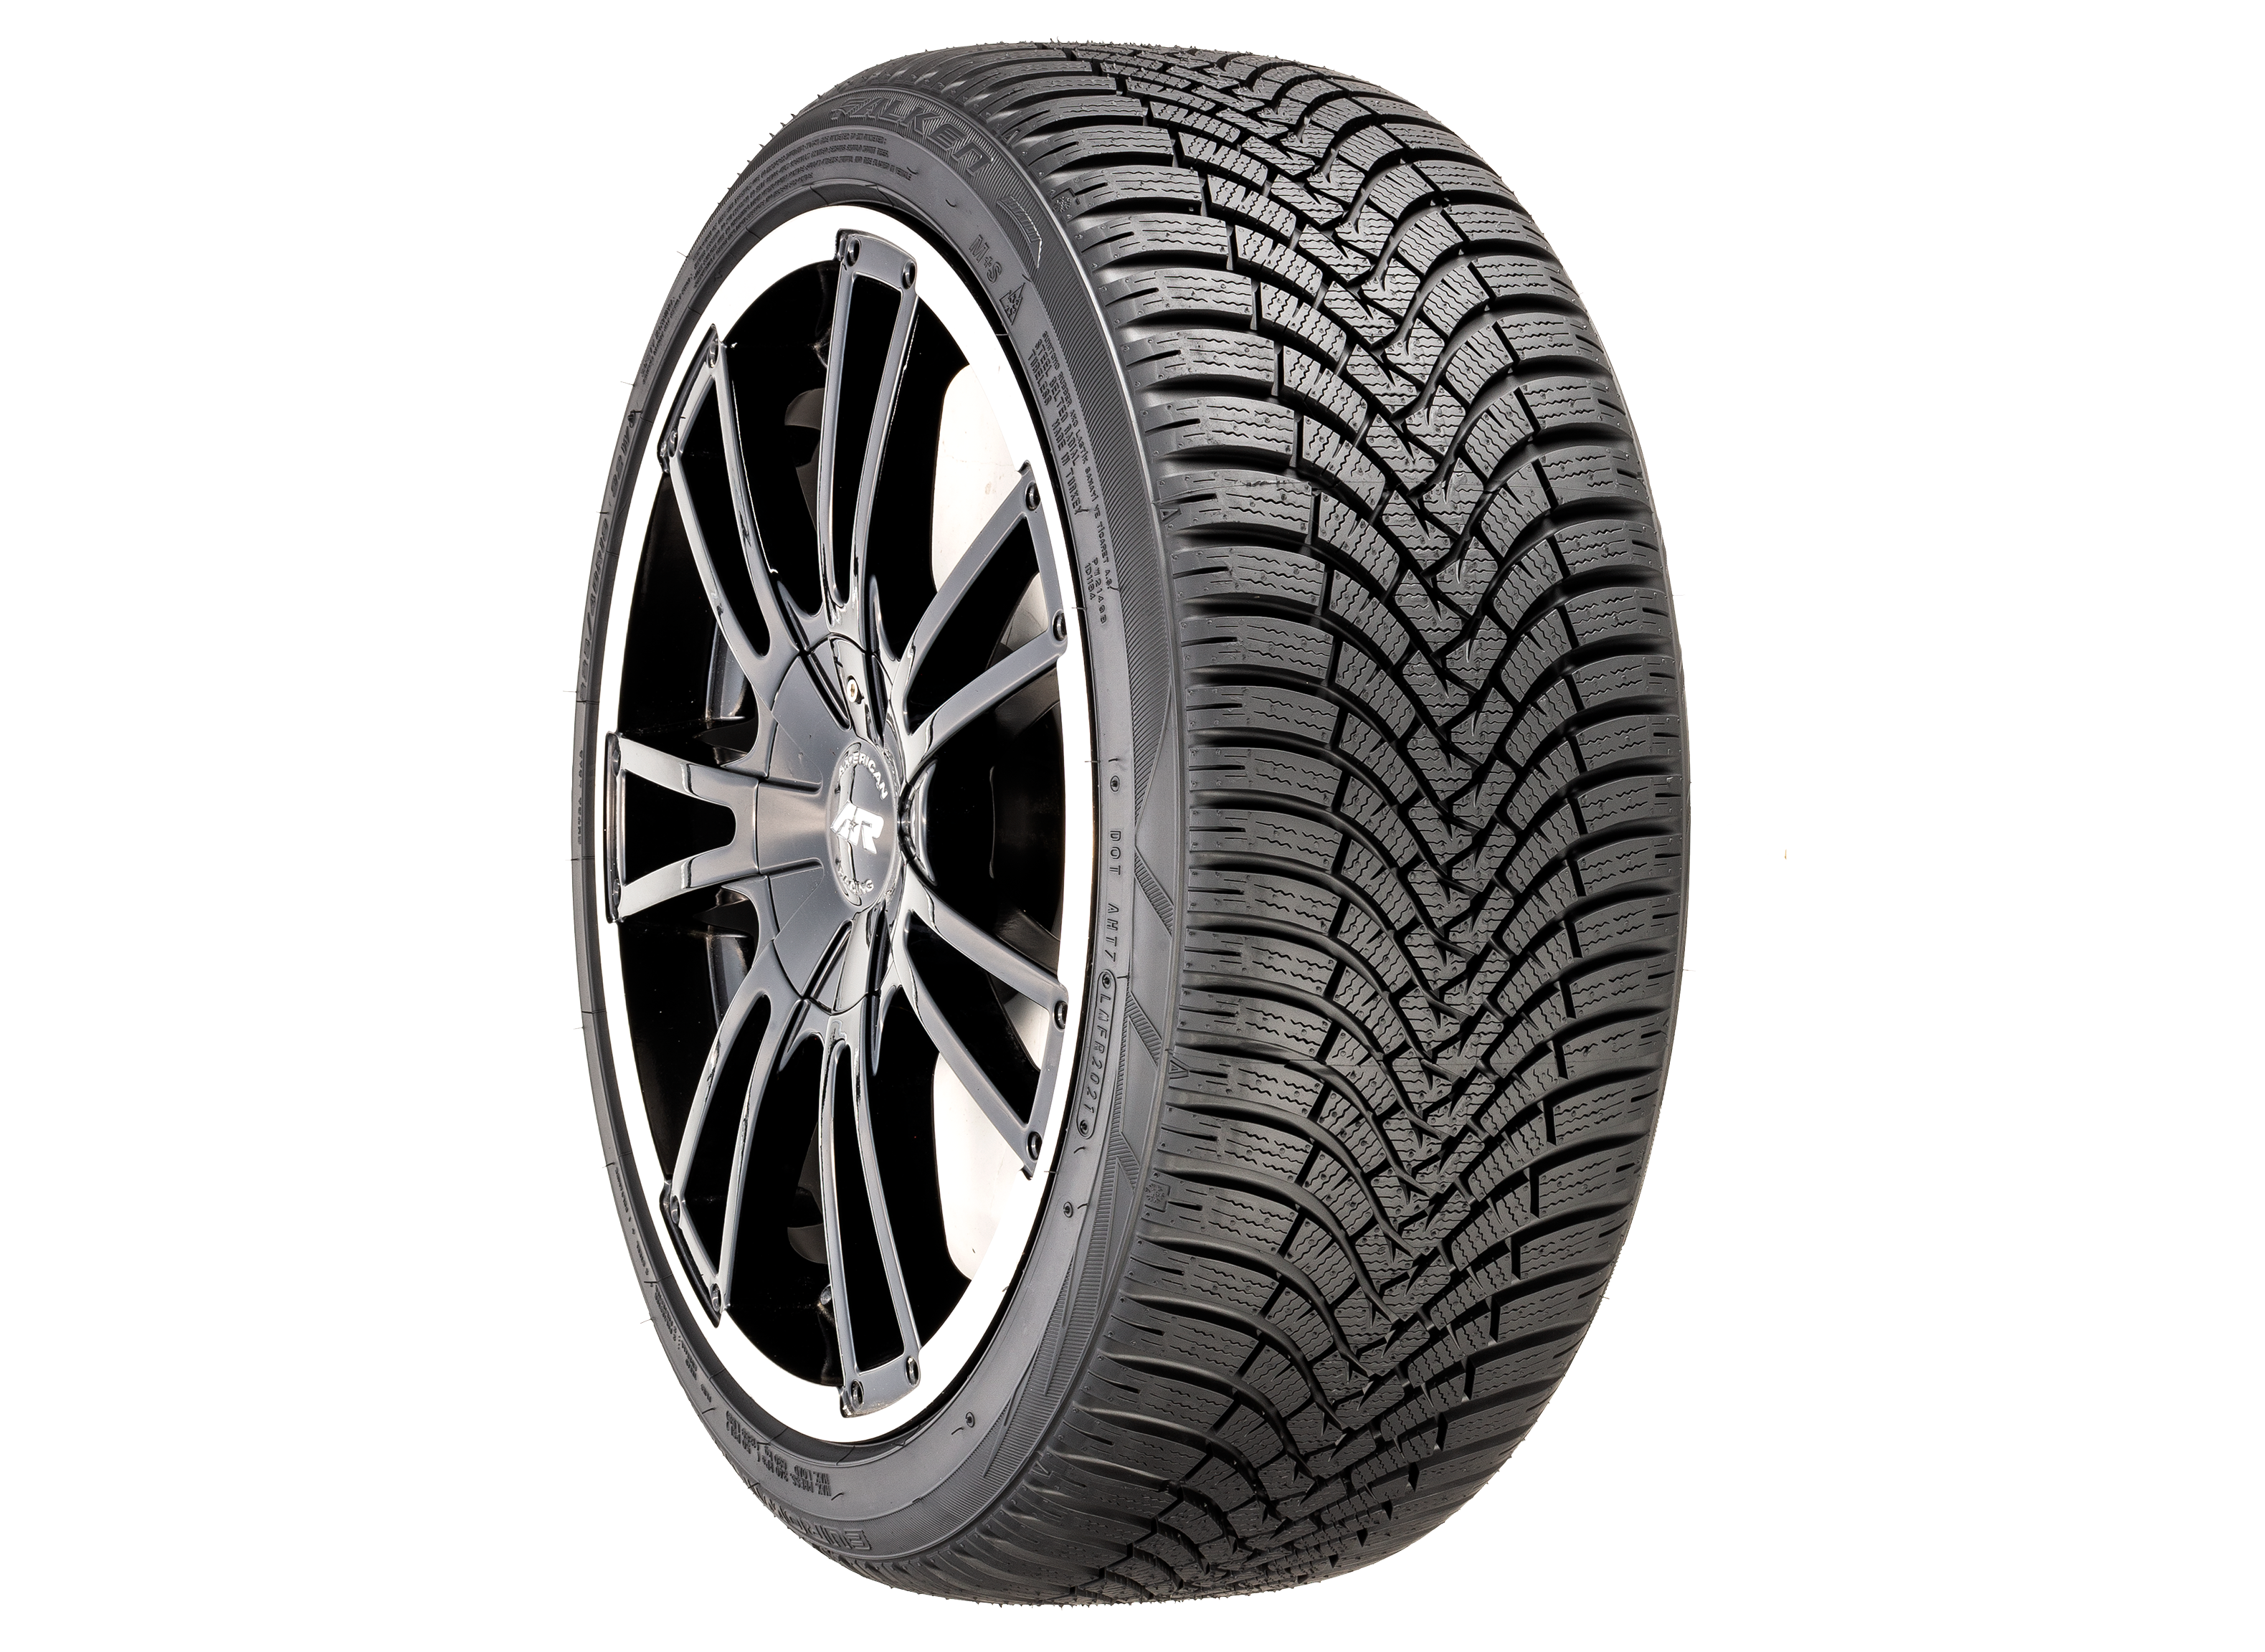 Falken Eurowinter HS01 Tire Review - Consumer Reports